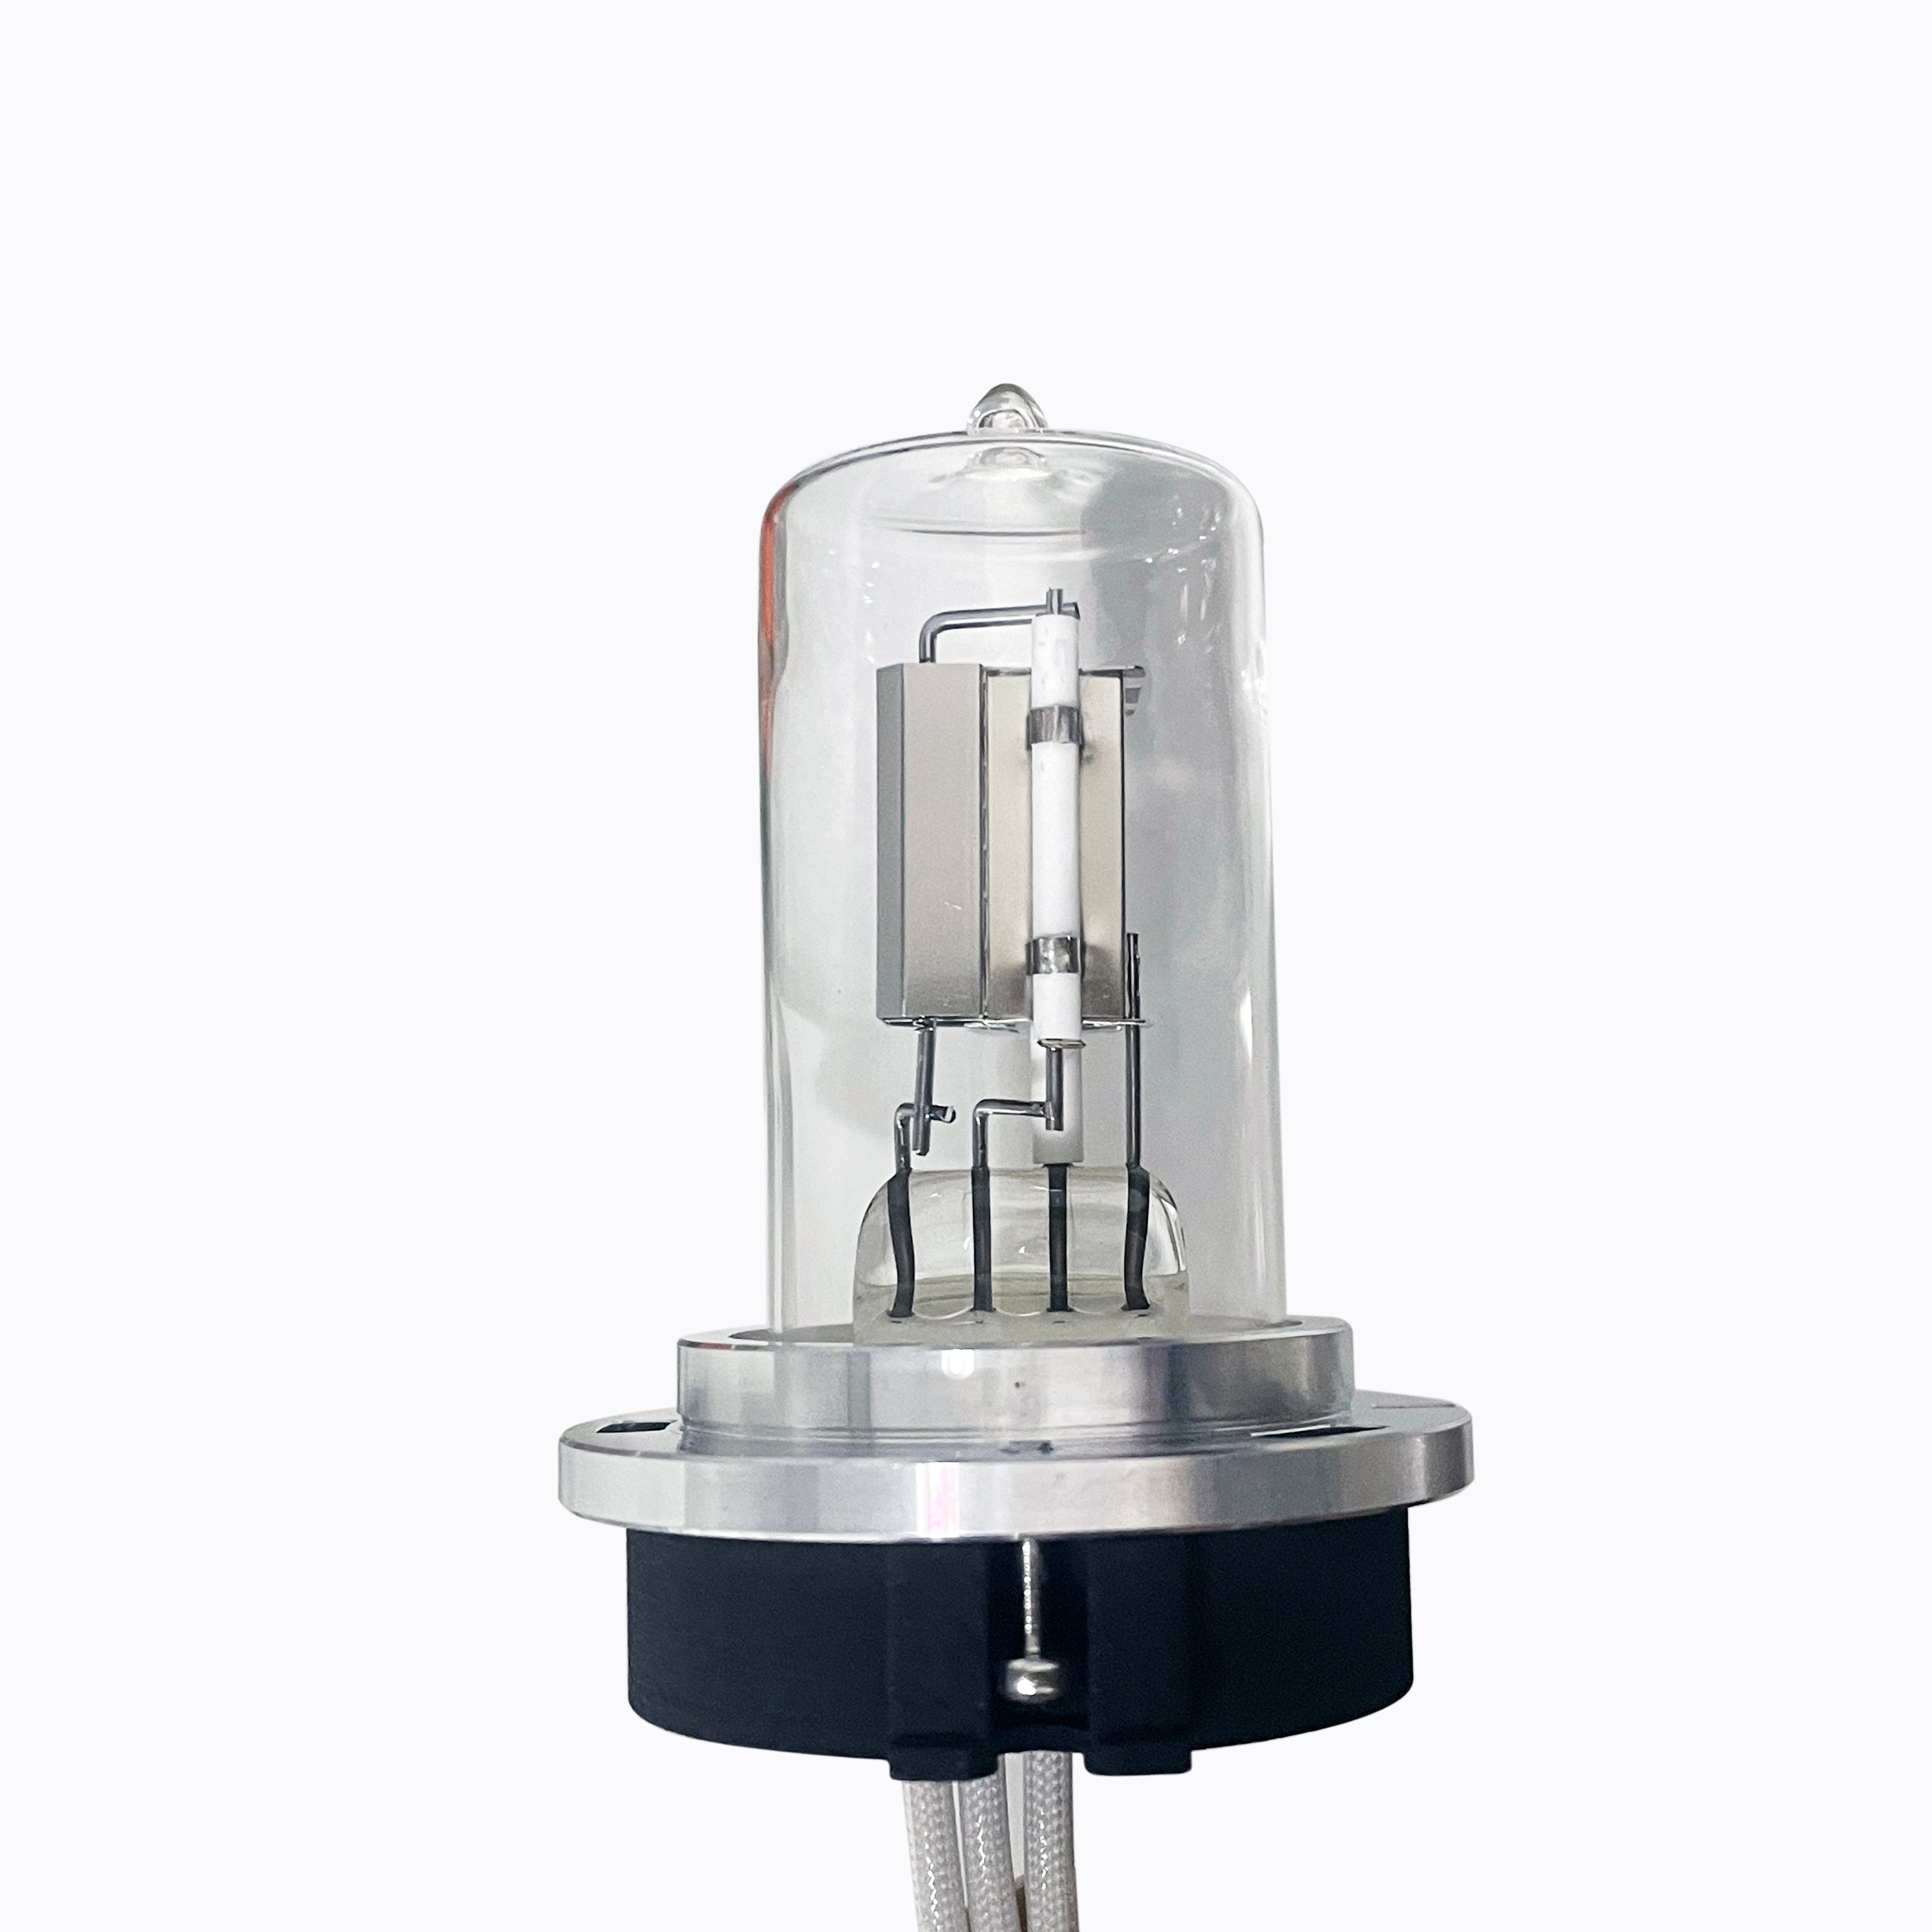 Alternative Waters Deuterium Lamp for Waters UVD 2487